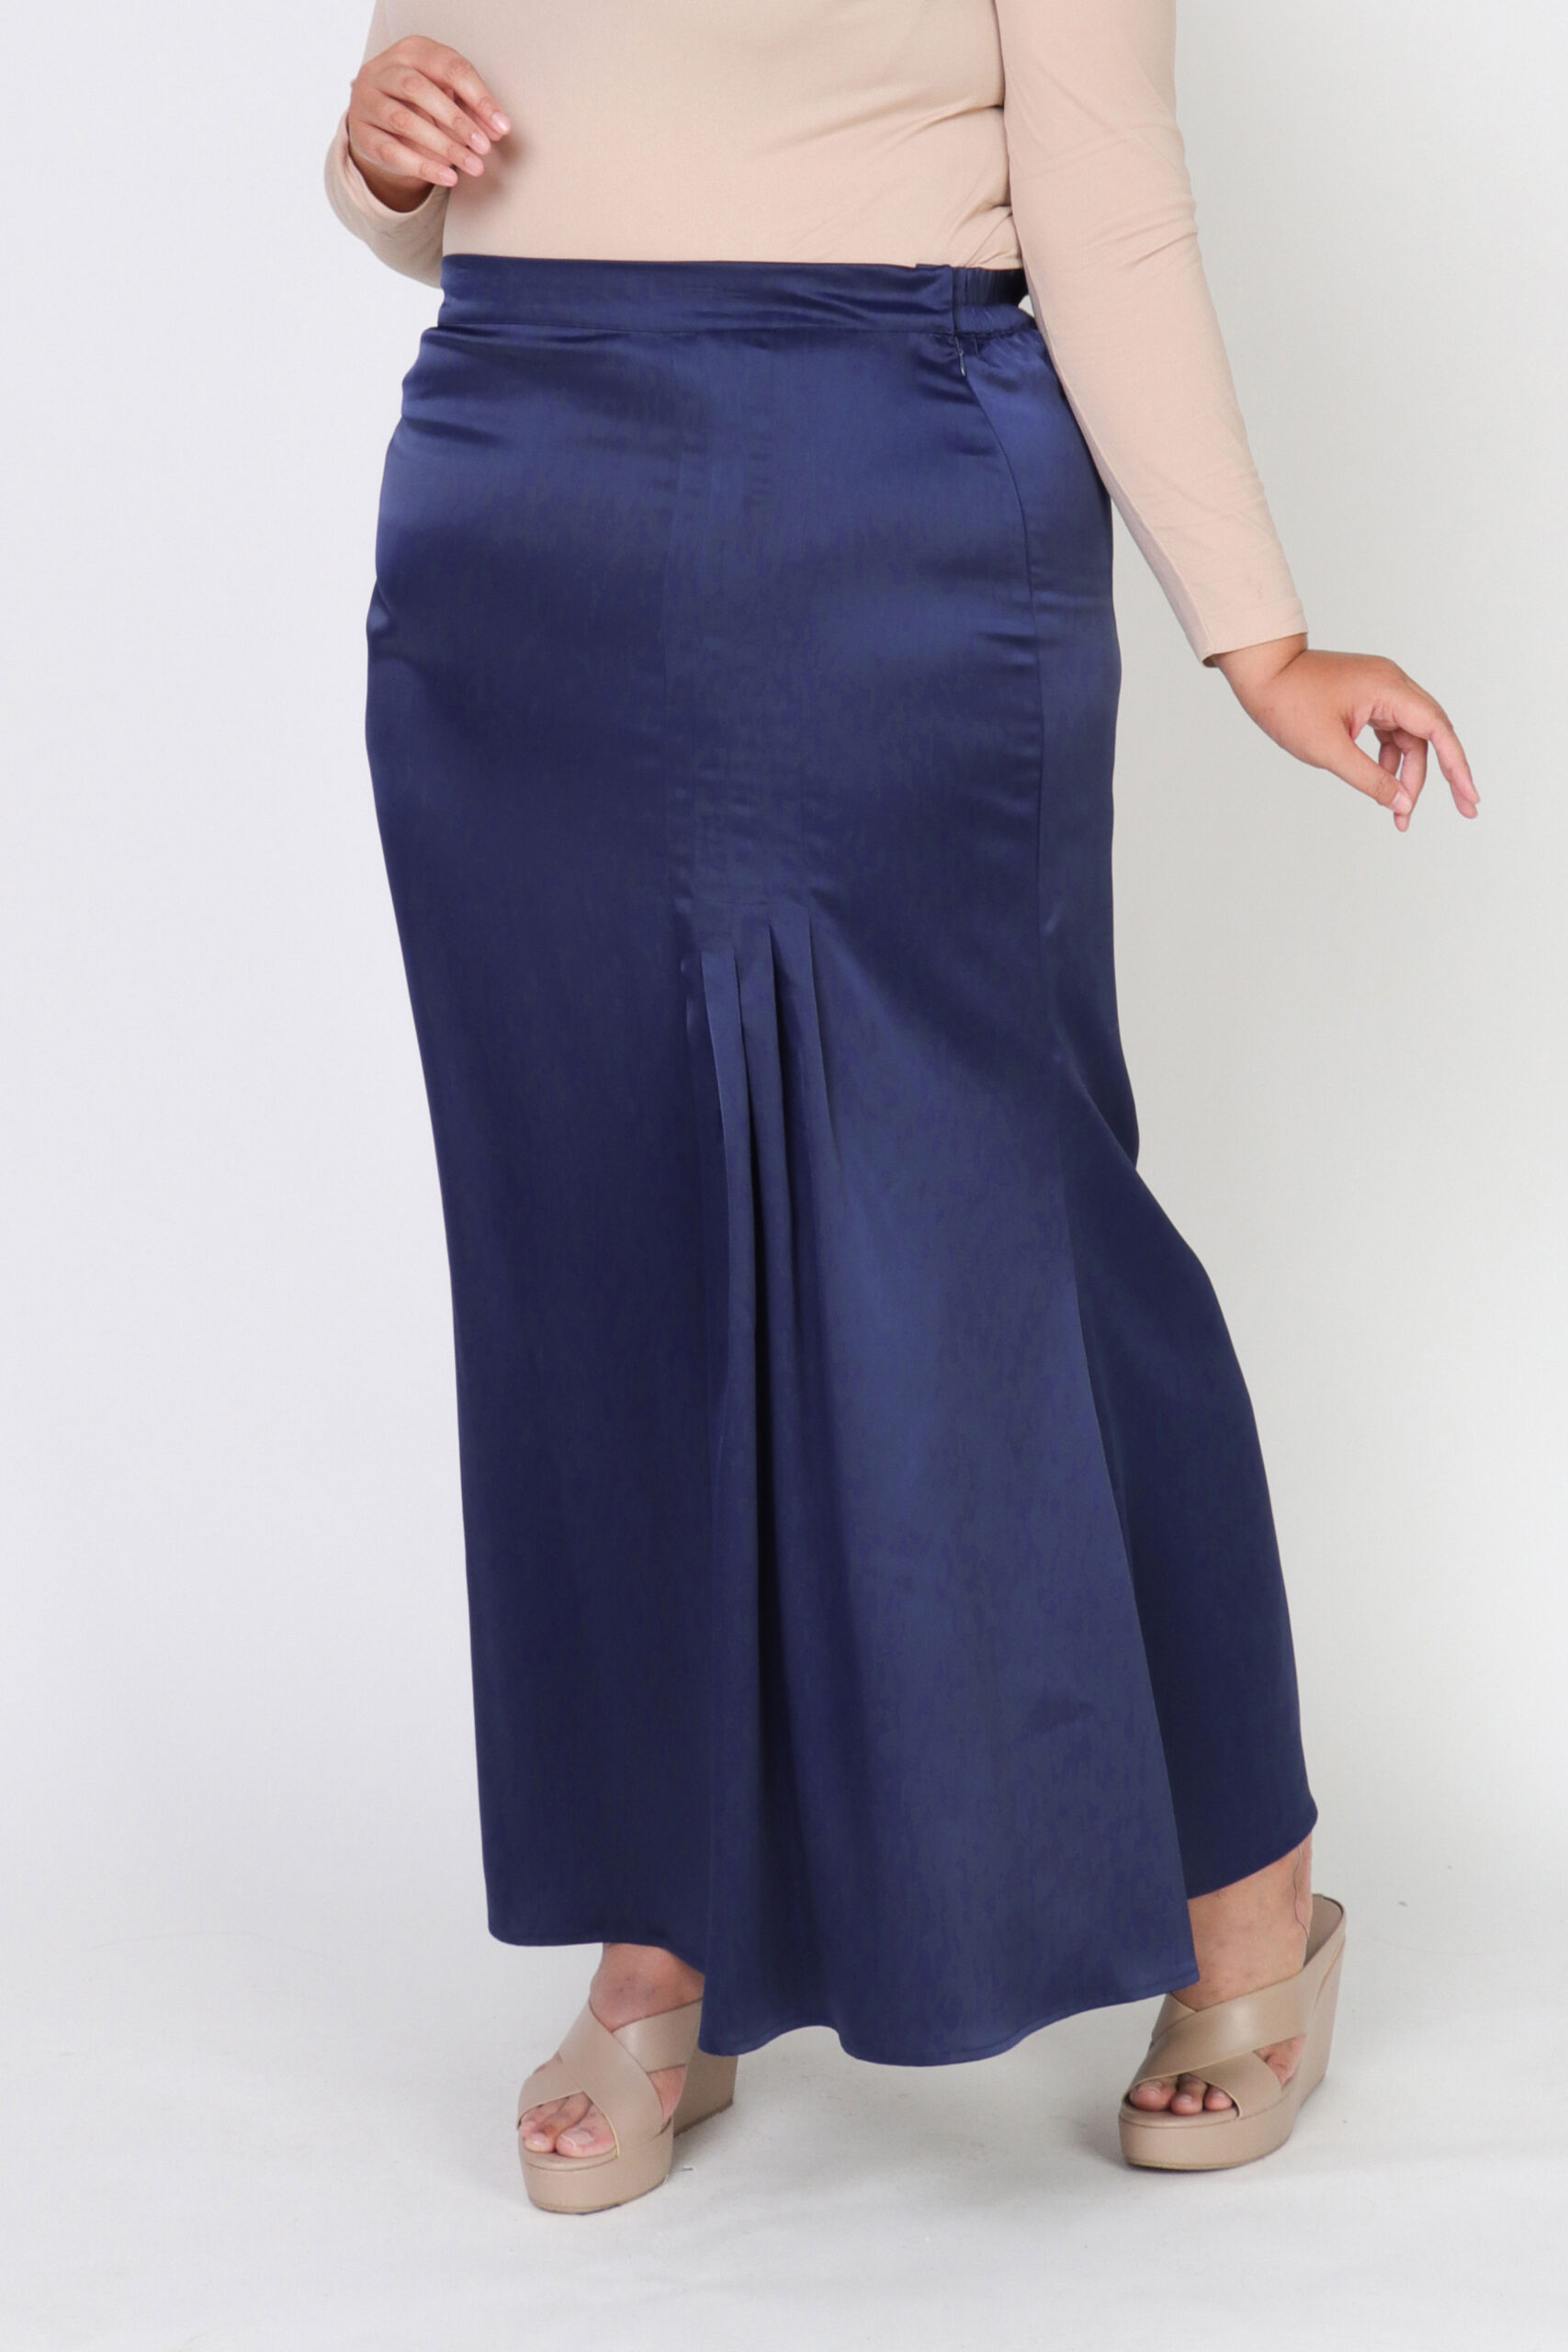 Jasmina - Nona Manis Plus Skirt Navy Blue